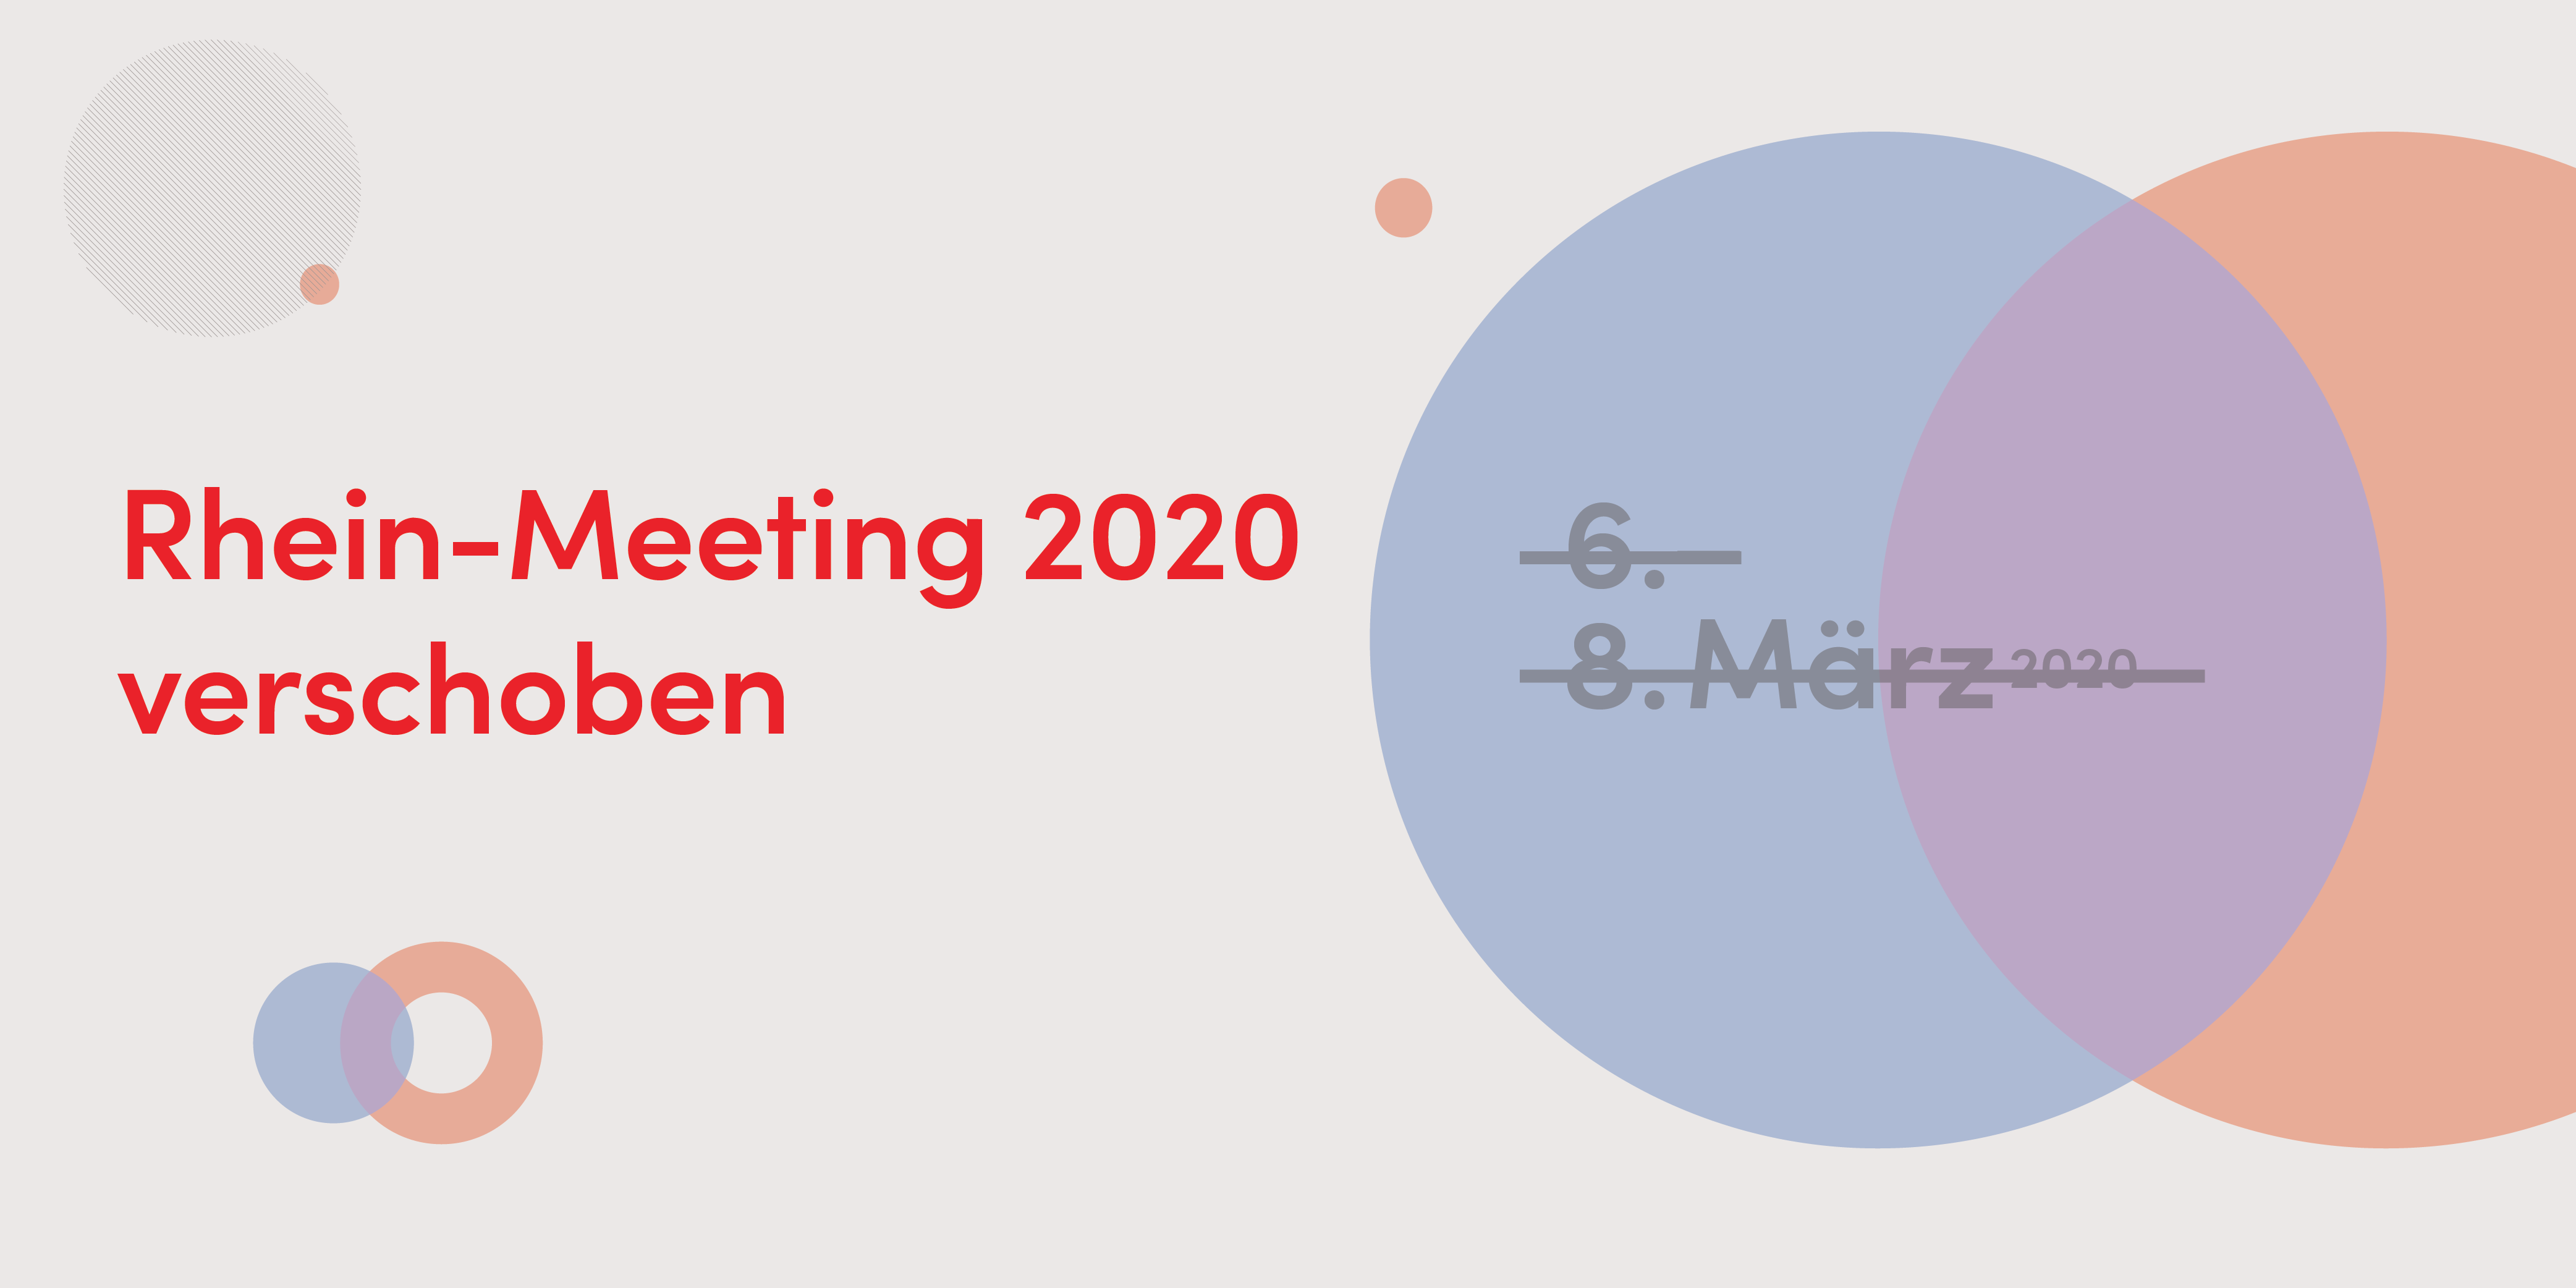 Rhein-Meeting 2020 verschoben